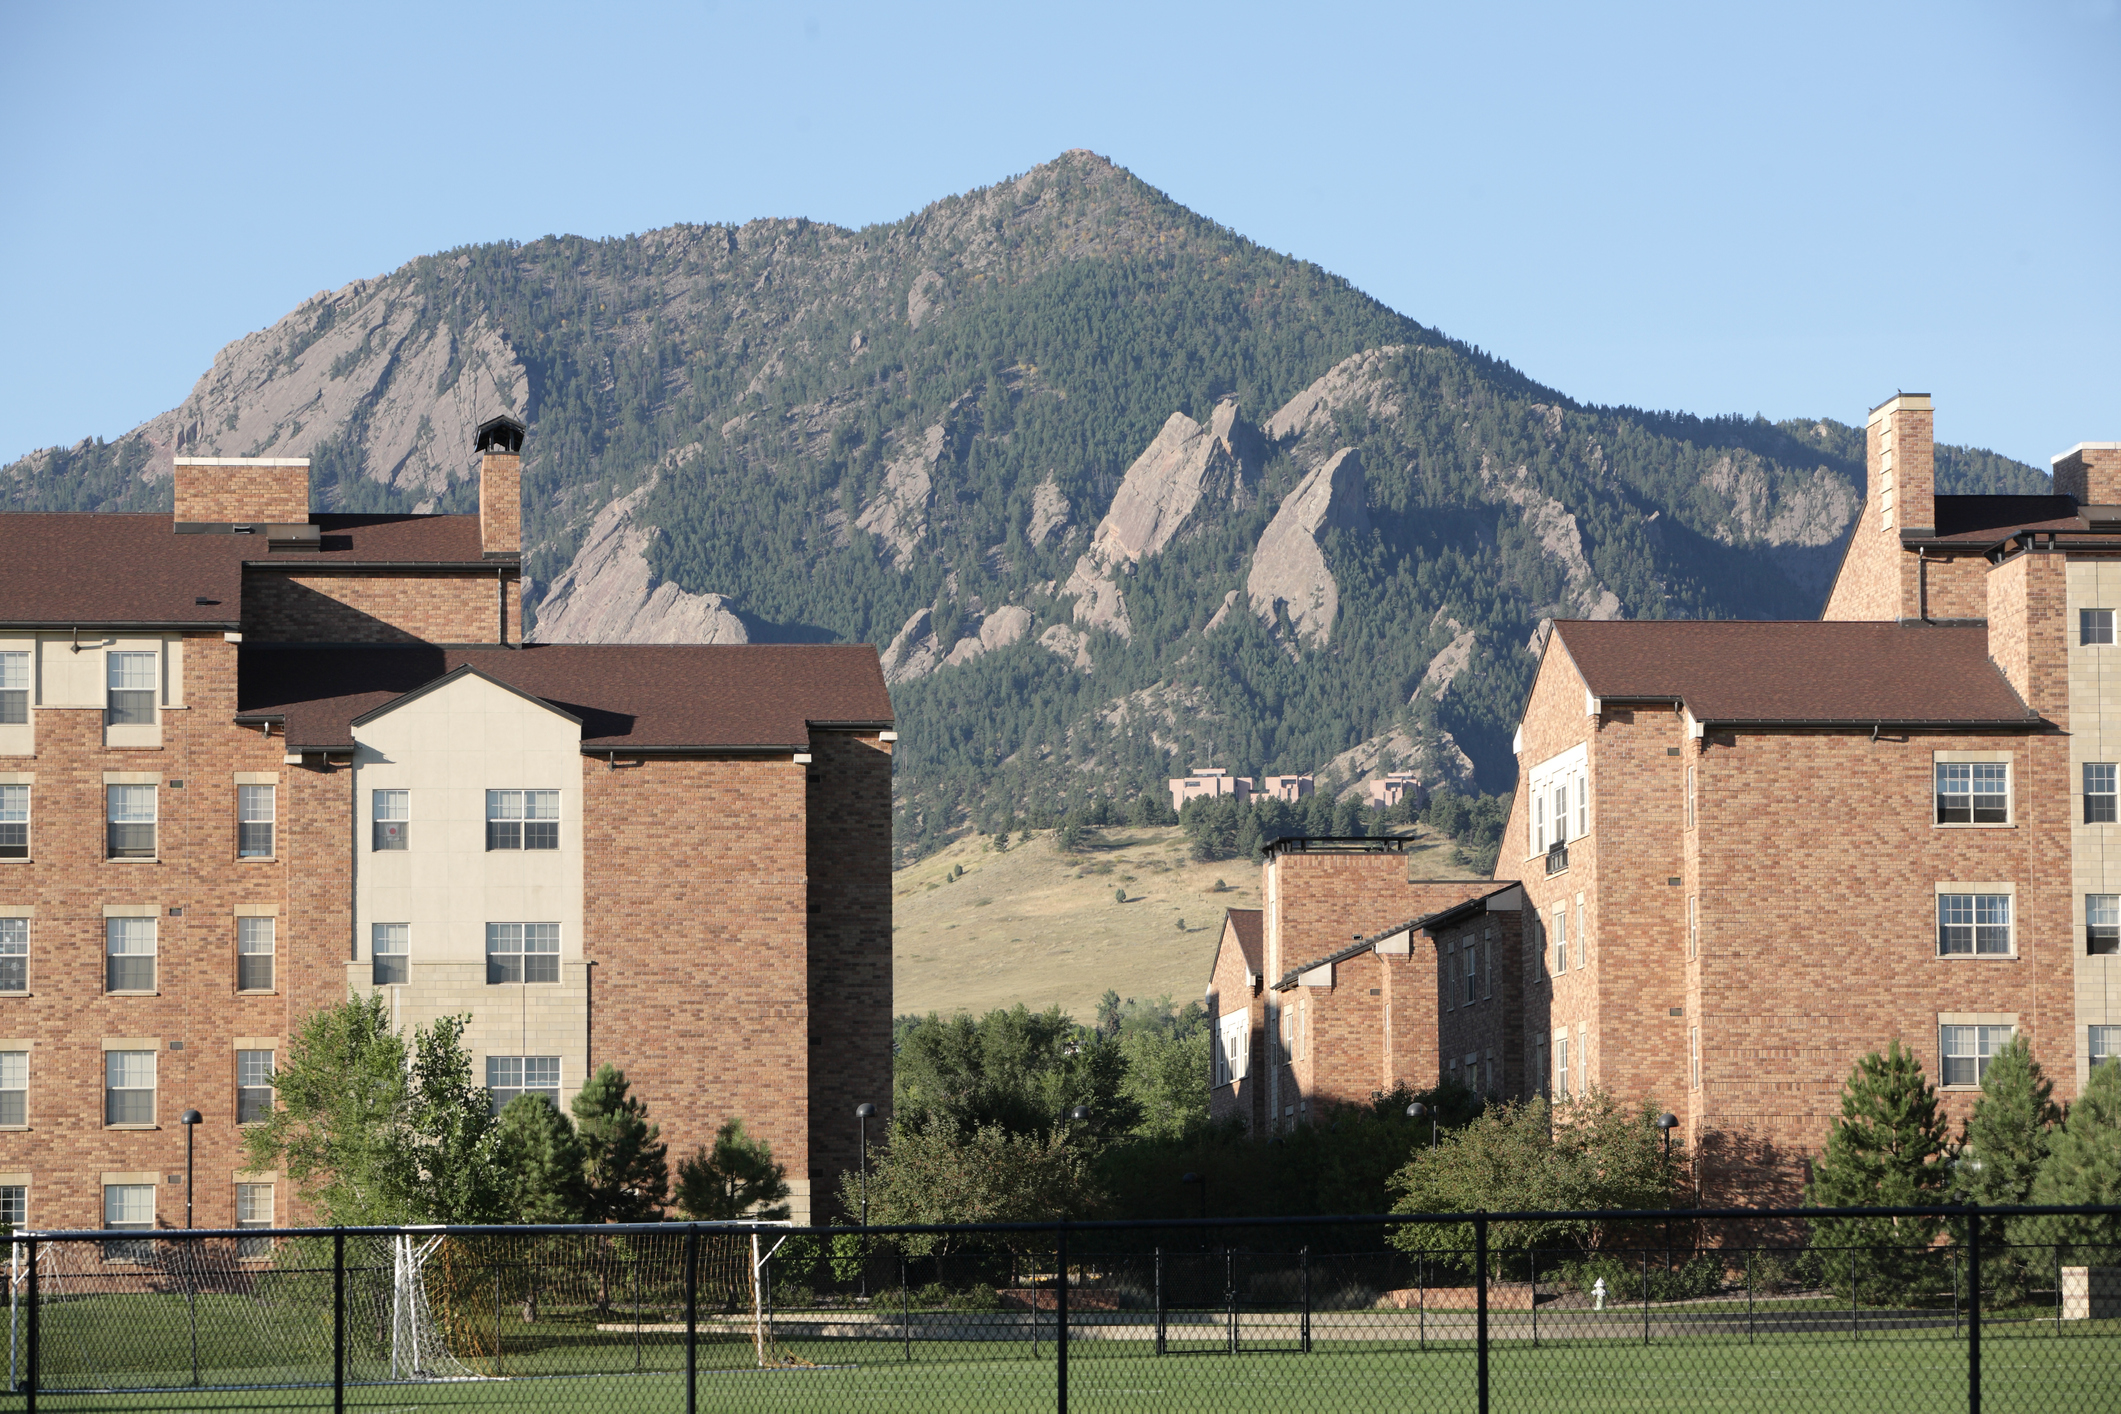 Bear Creek Apartments and Williams Village dorms at University of Colorado Boulder